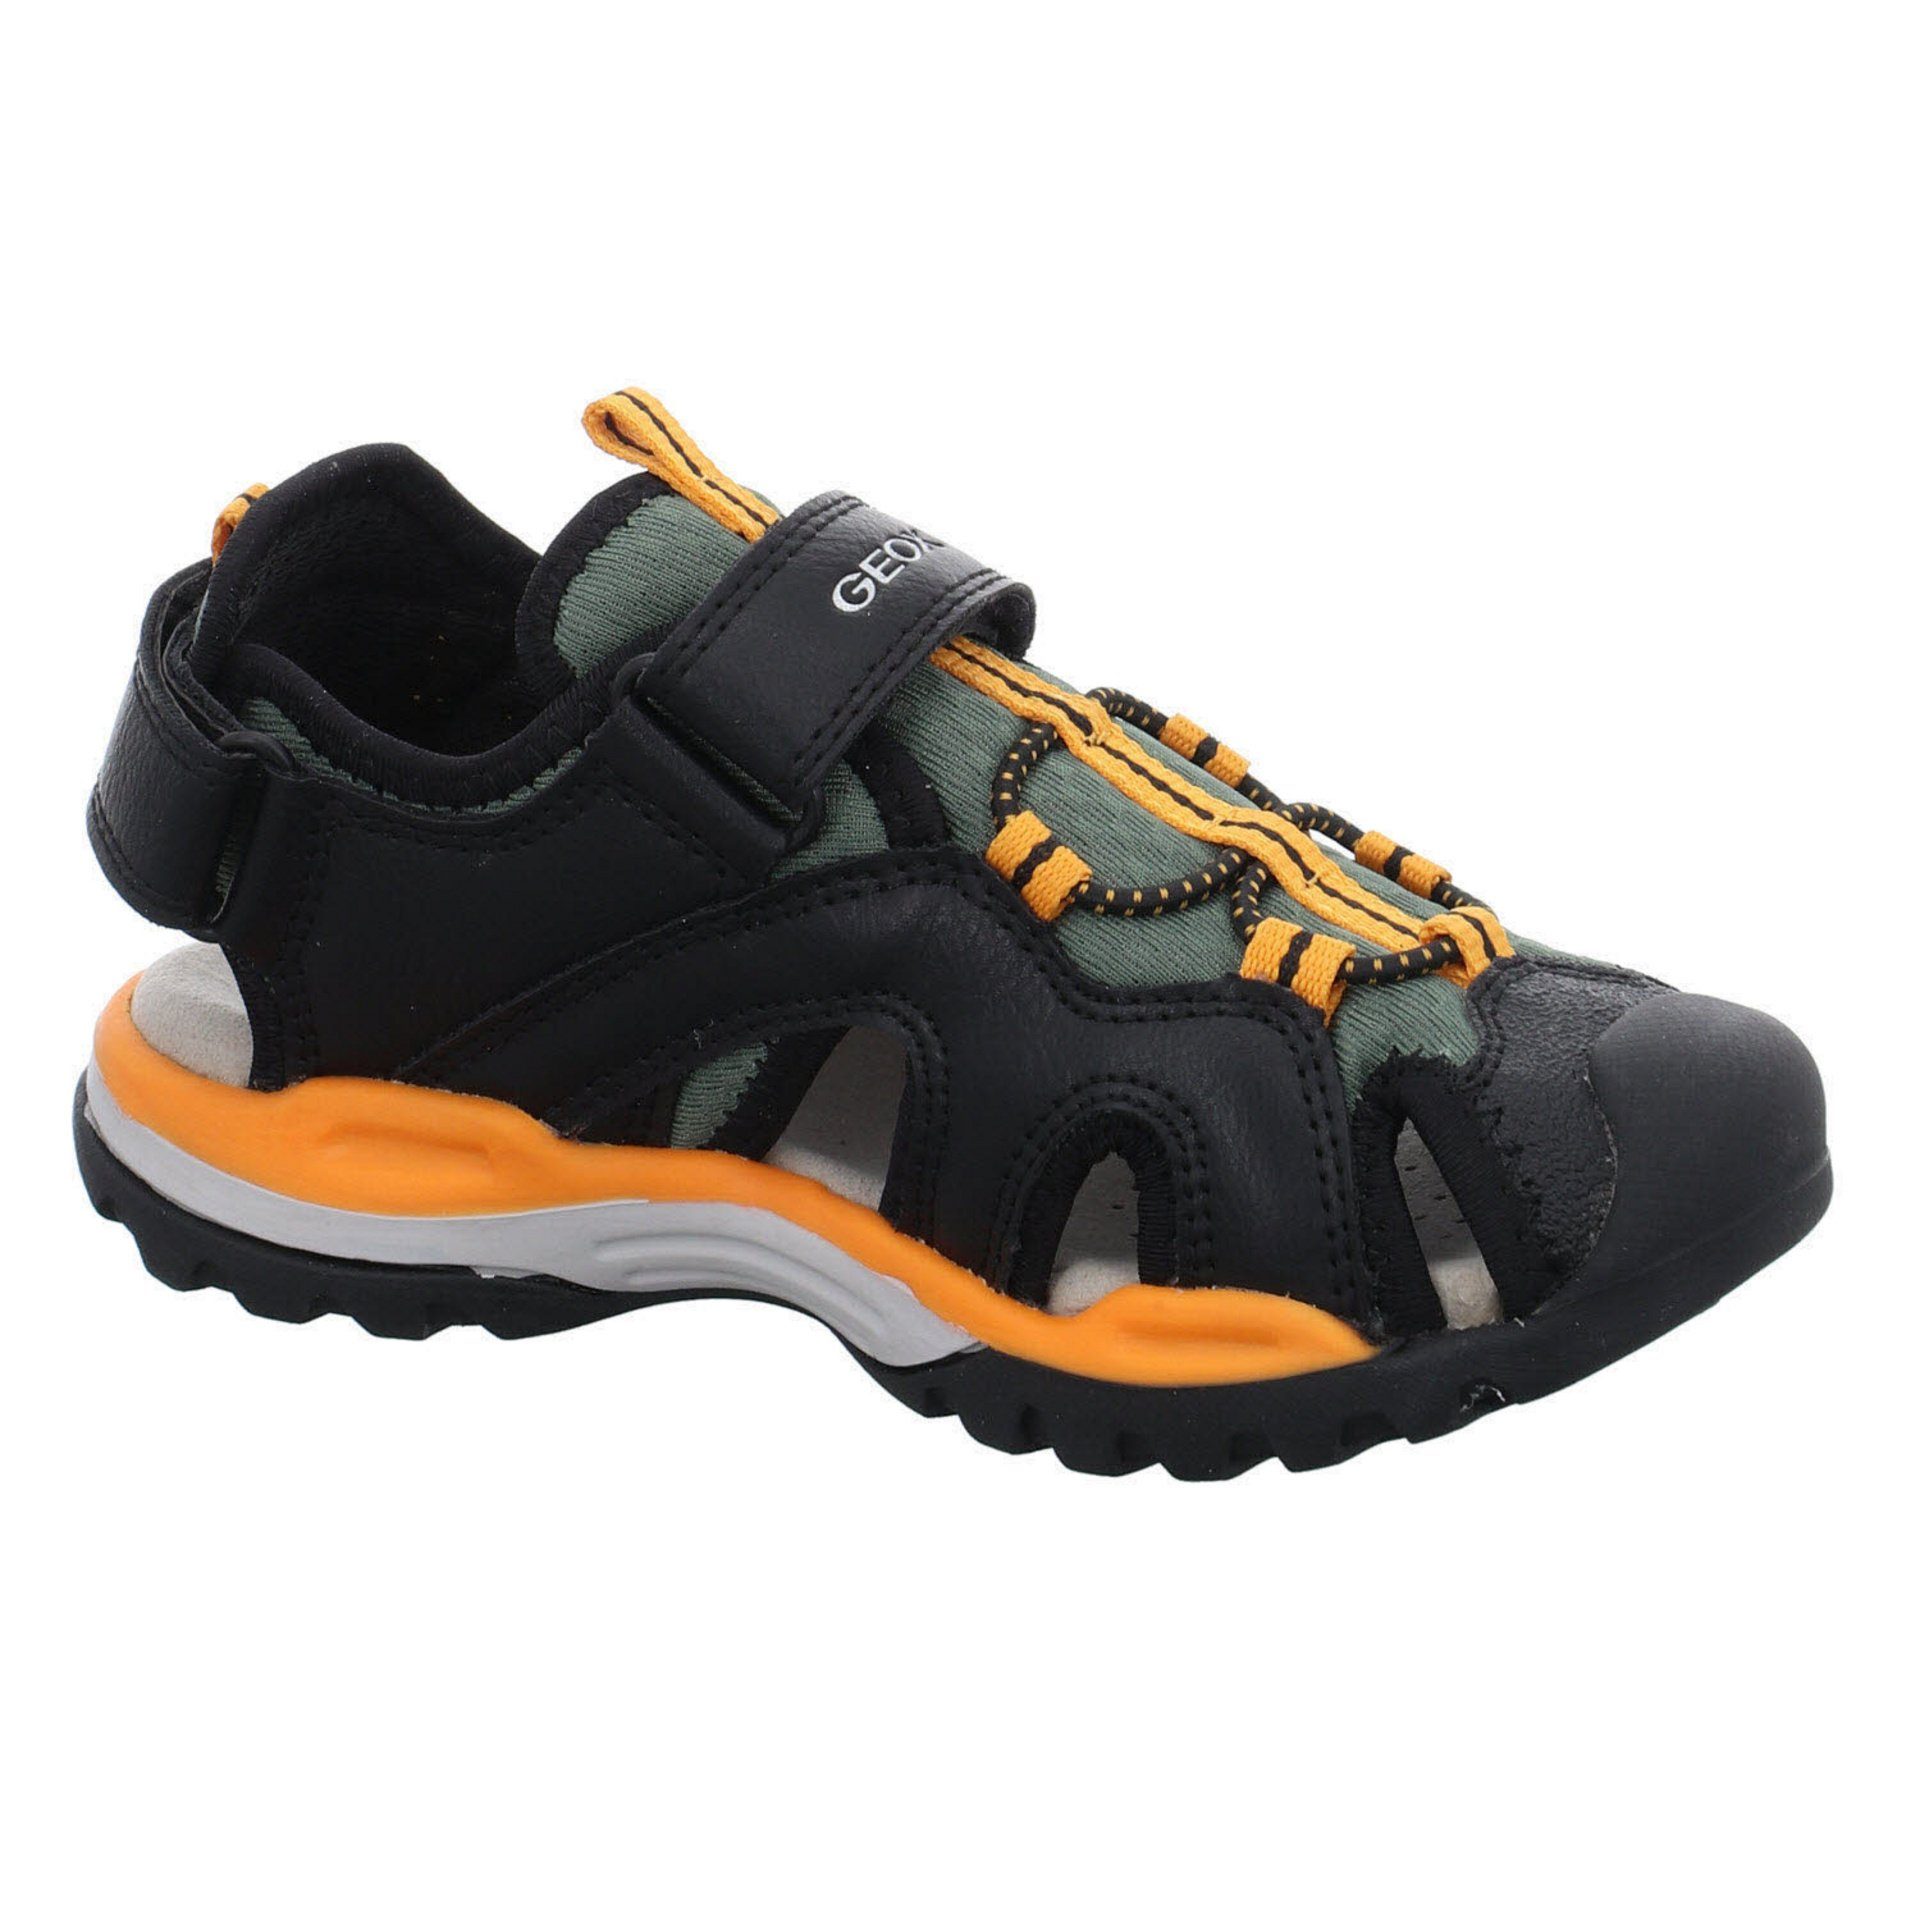 Jungen Schwarz Sandalen Outdoorsandale Geox Borealis Sandale Schuhe Synthetikkombination Orange